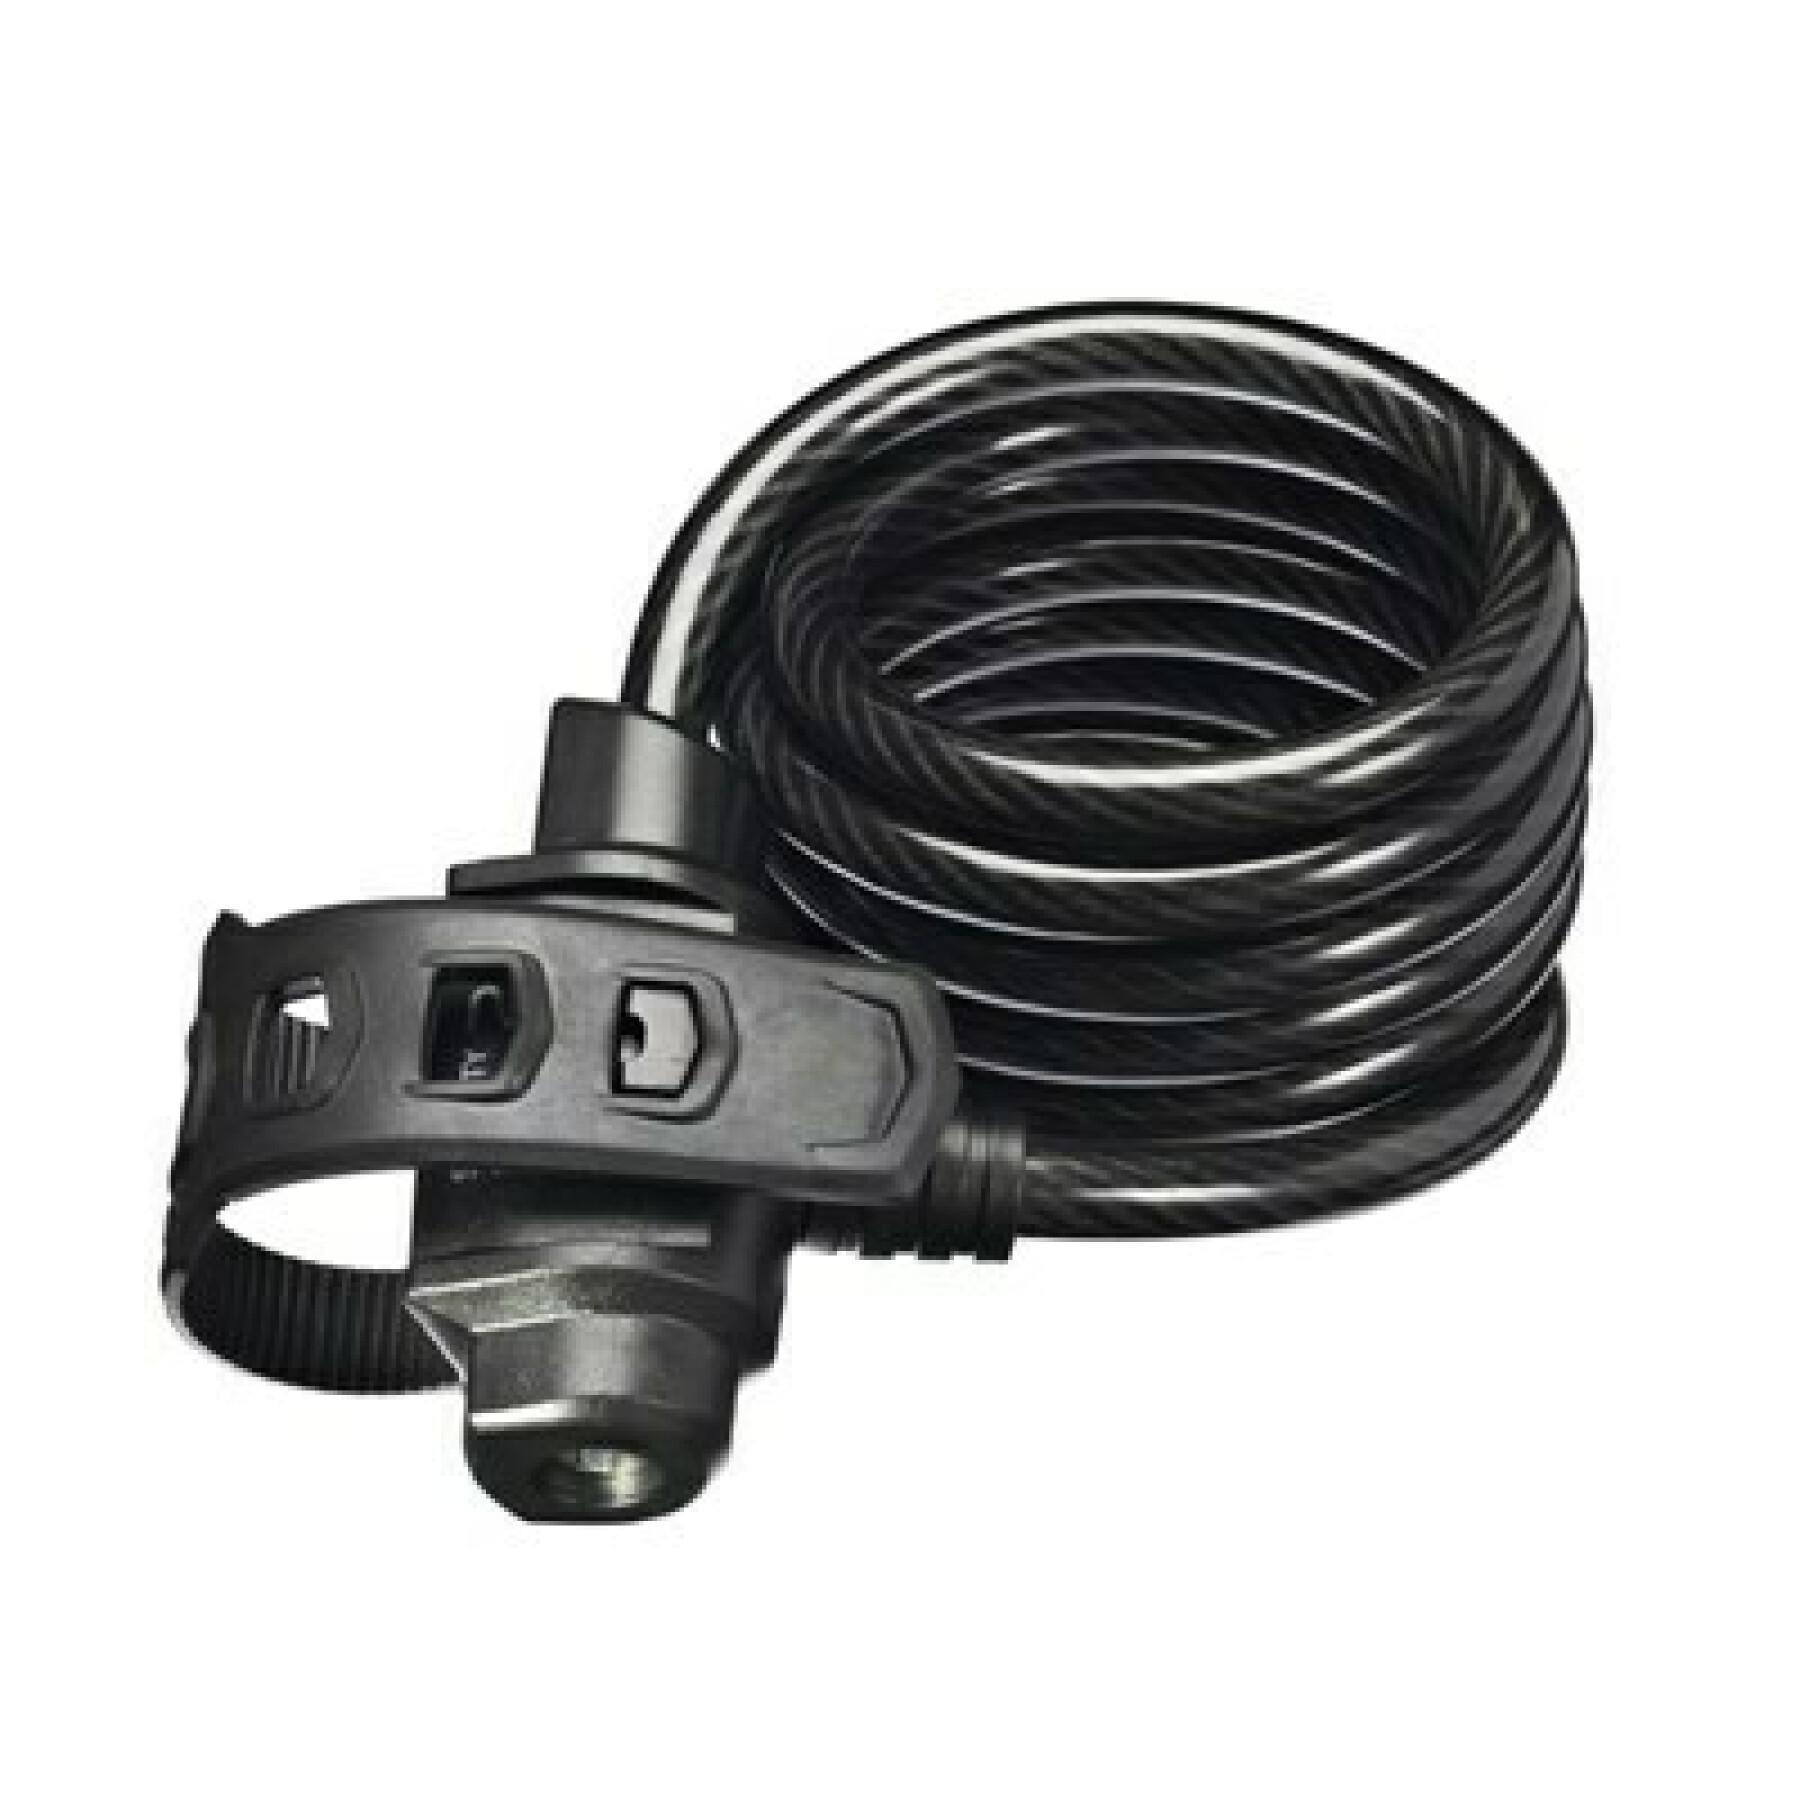 Cerradura de cable Trelock Trecolor 180cm Ø 10mm Sk 222/180/10 Fixxgo